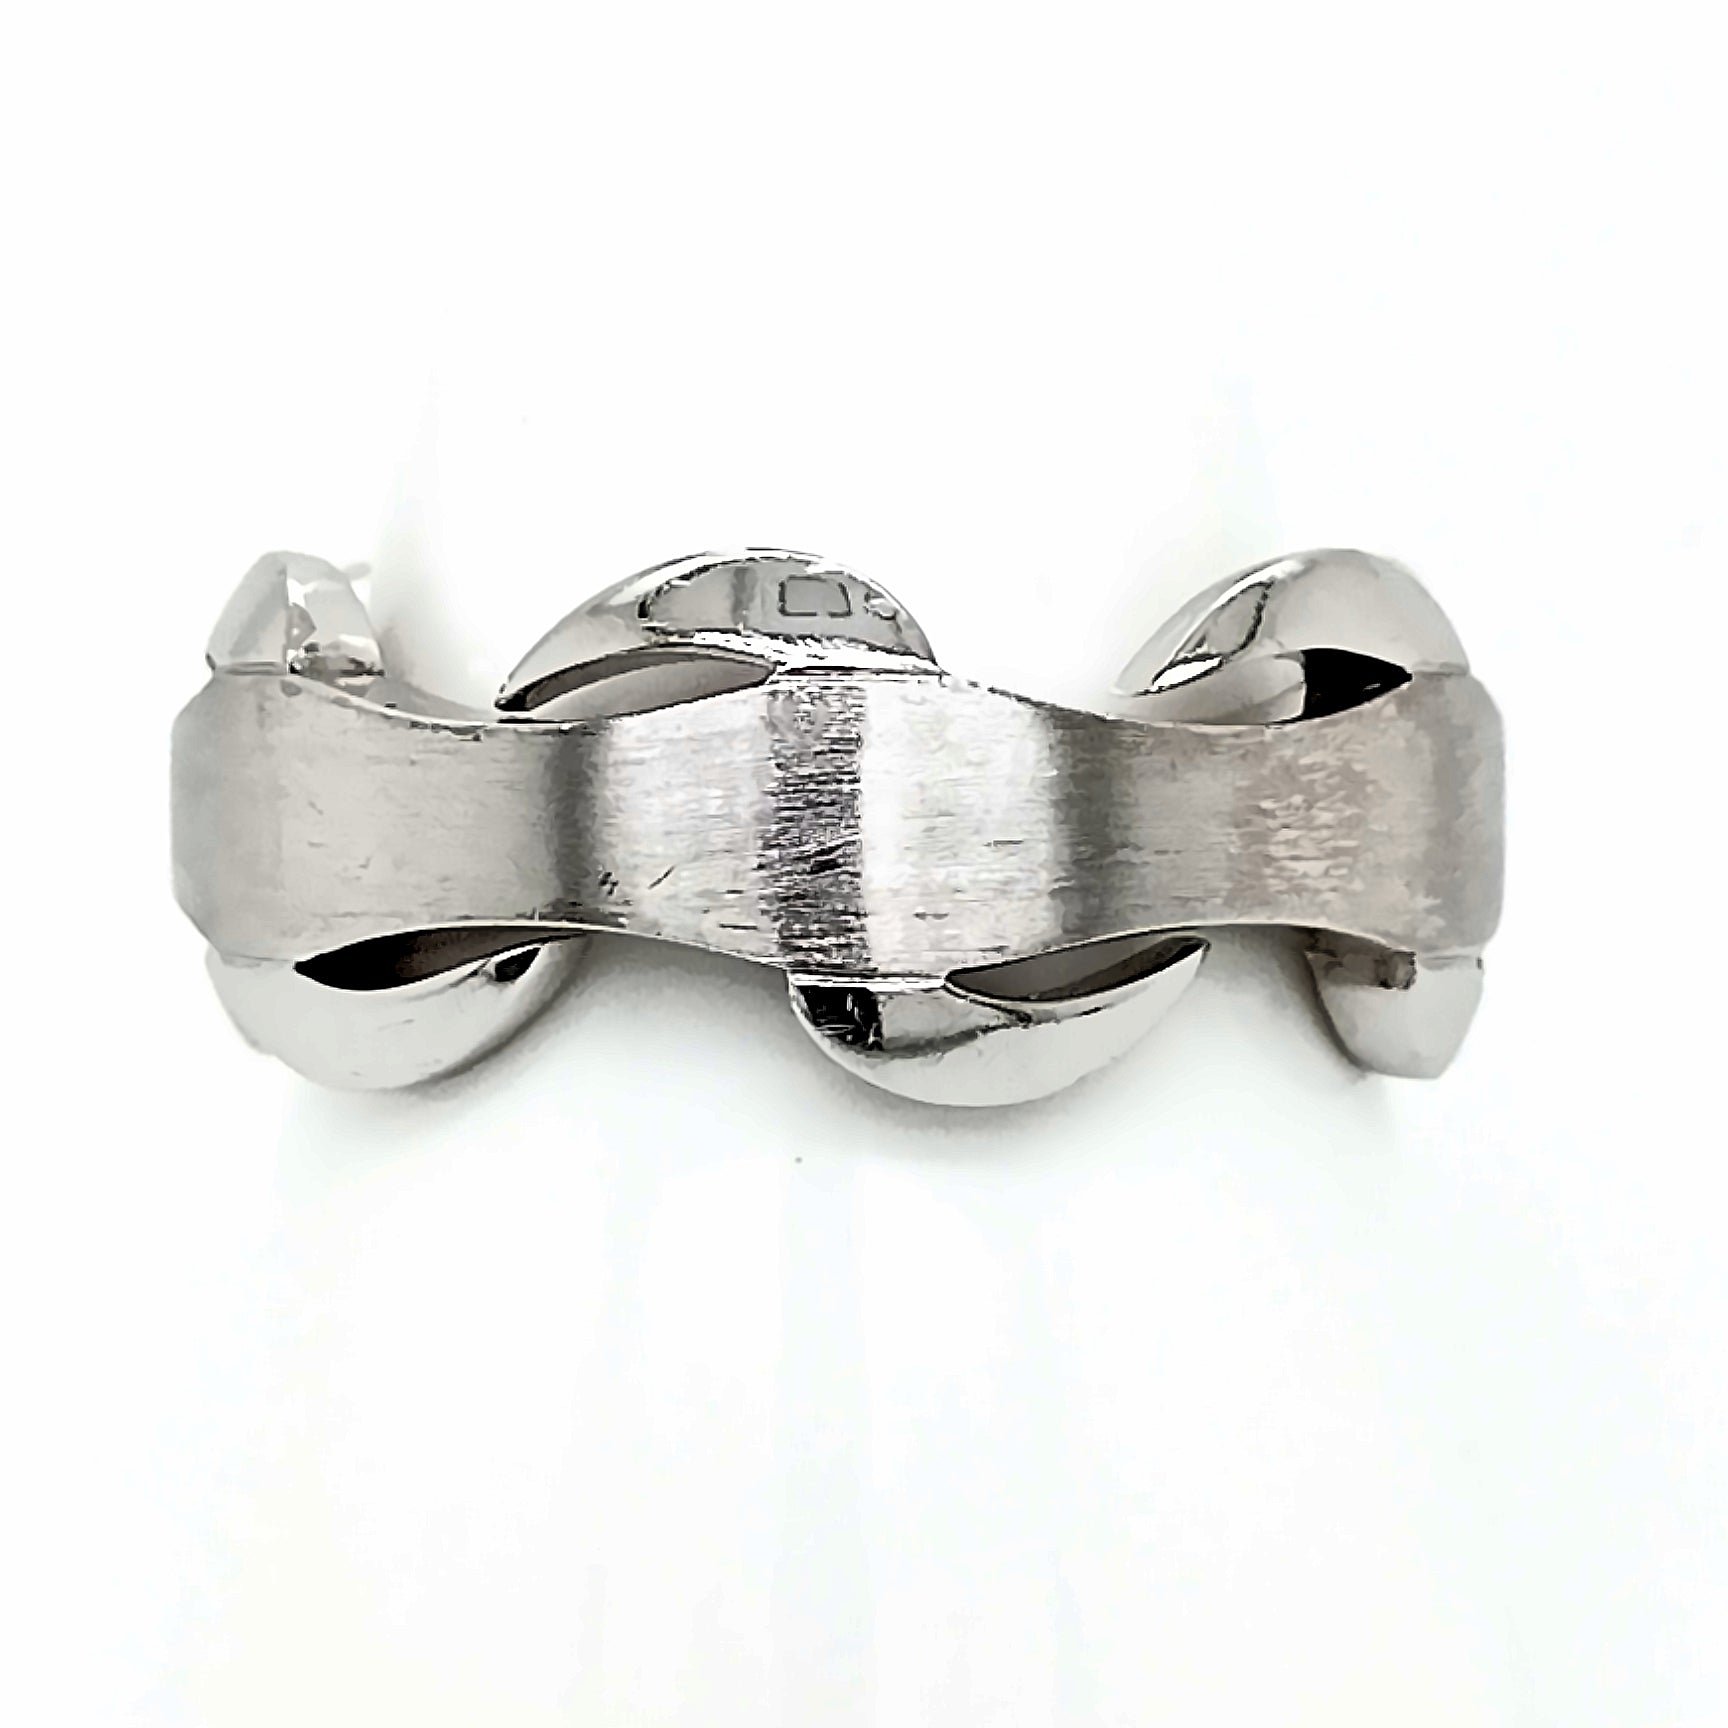 18ct White Gold Satin & Polished Thorn Design Men's Wedding Ring